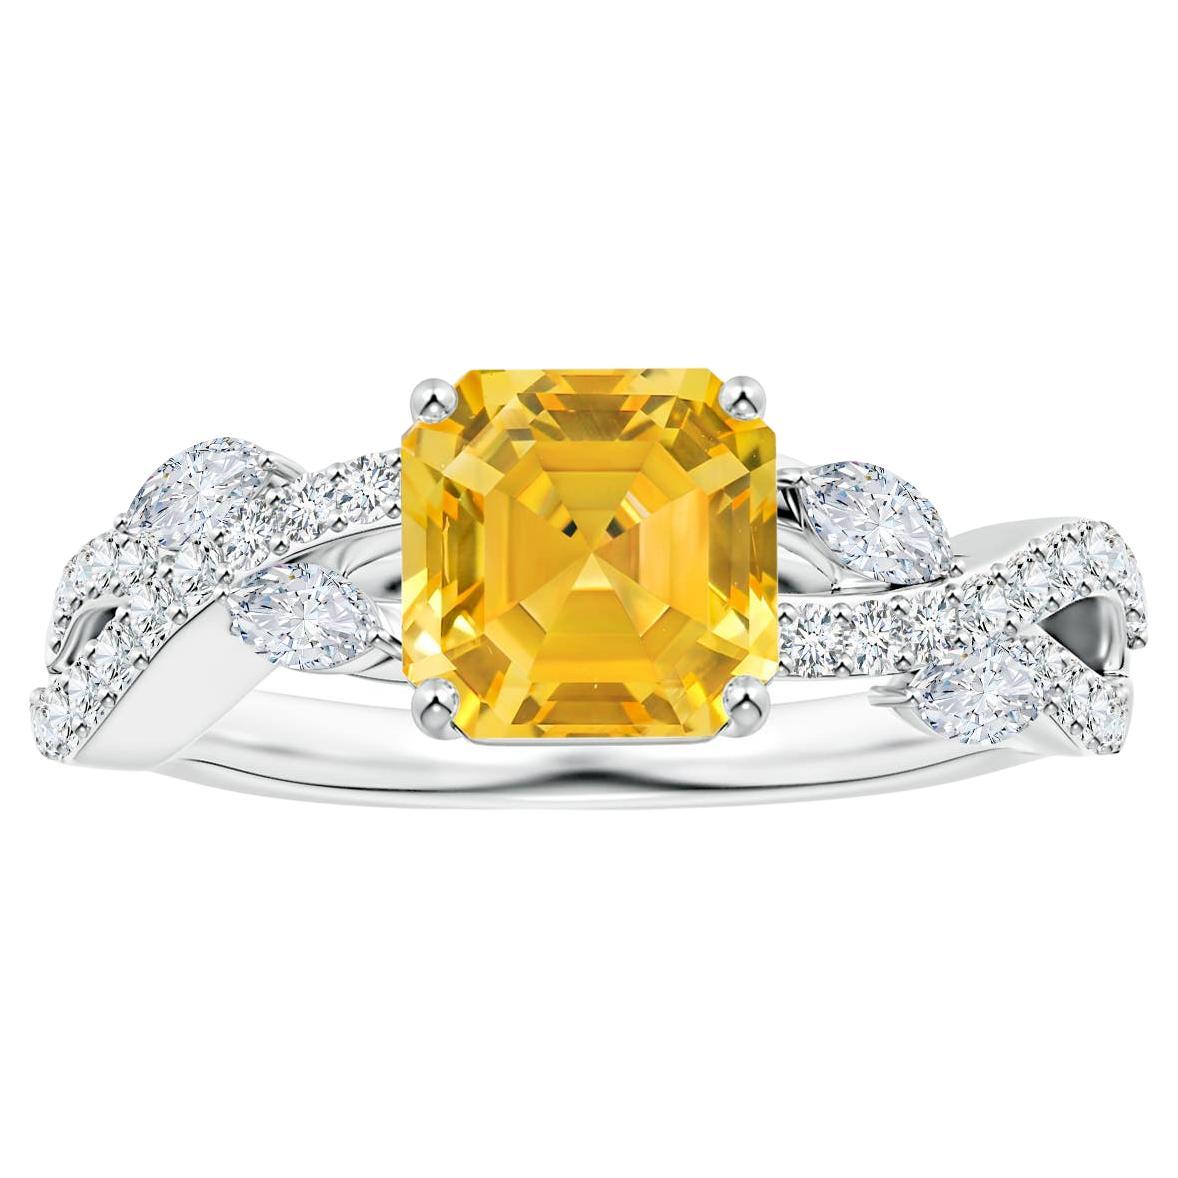 Angara Gia Certified Emerald-Cut Yellow Sapphire Diamond Ring in White Gold